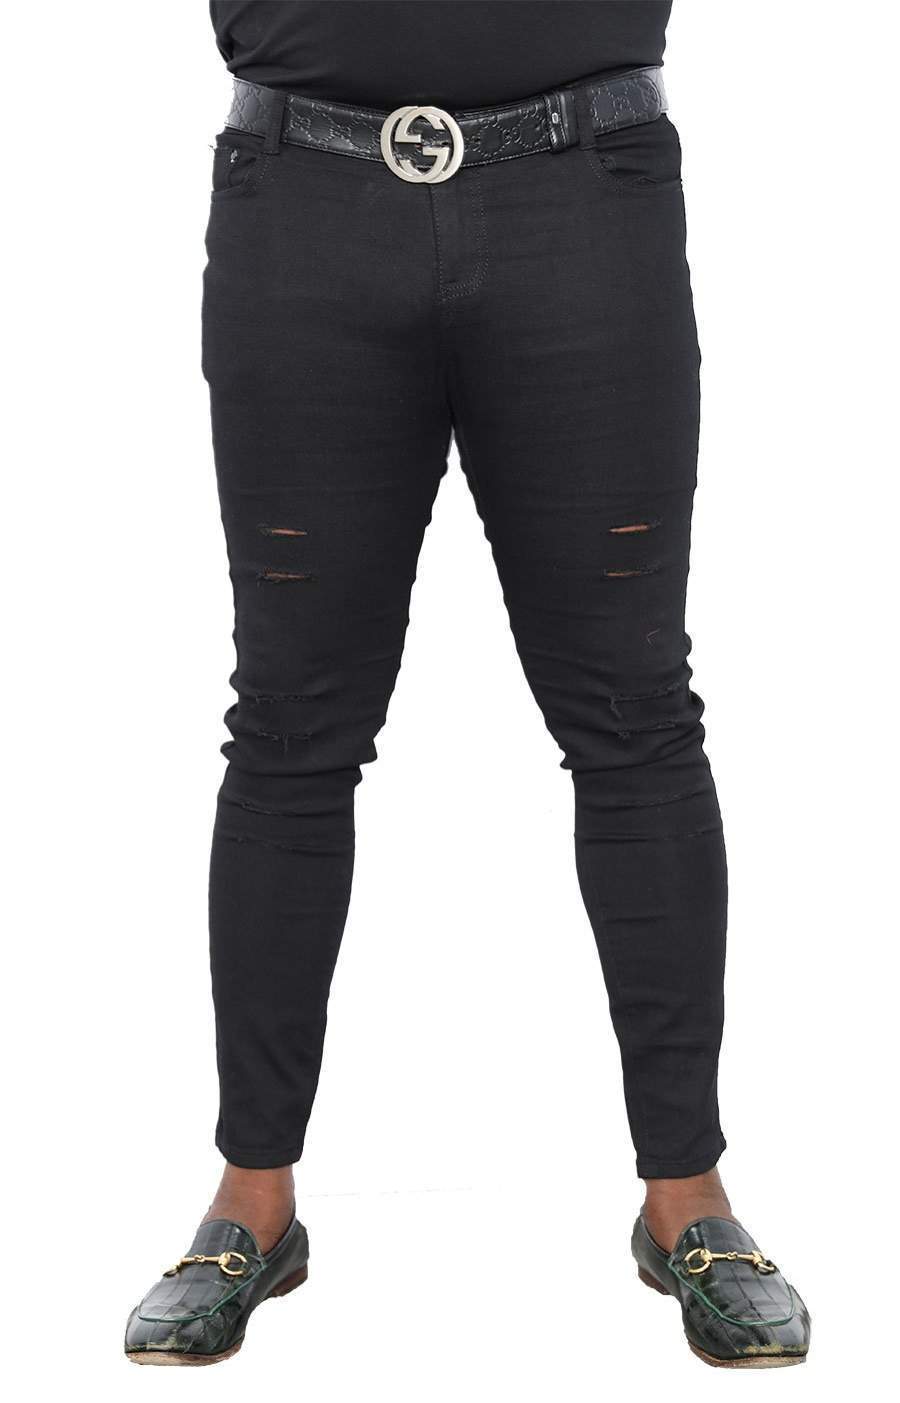 Black Stretchy Jeans Slim Fit-danddclothing-African Wear for Men,Black,Men Trousers